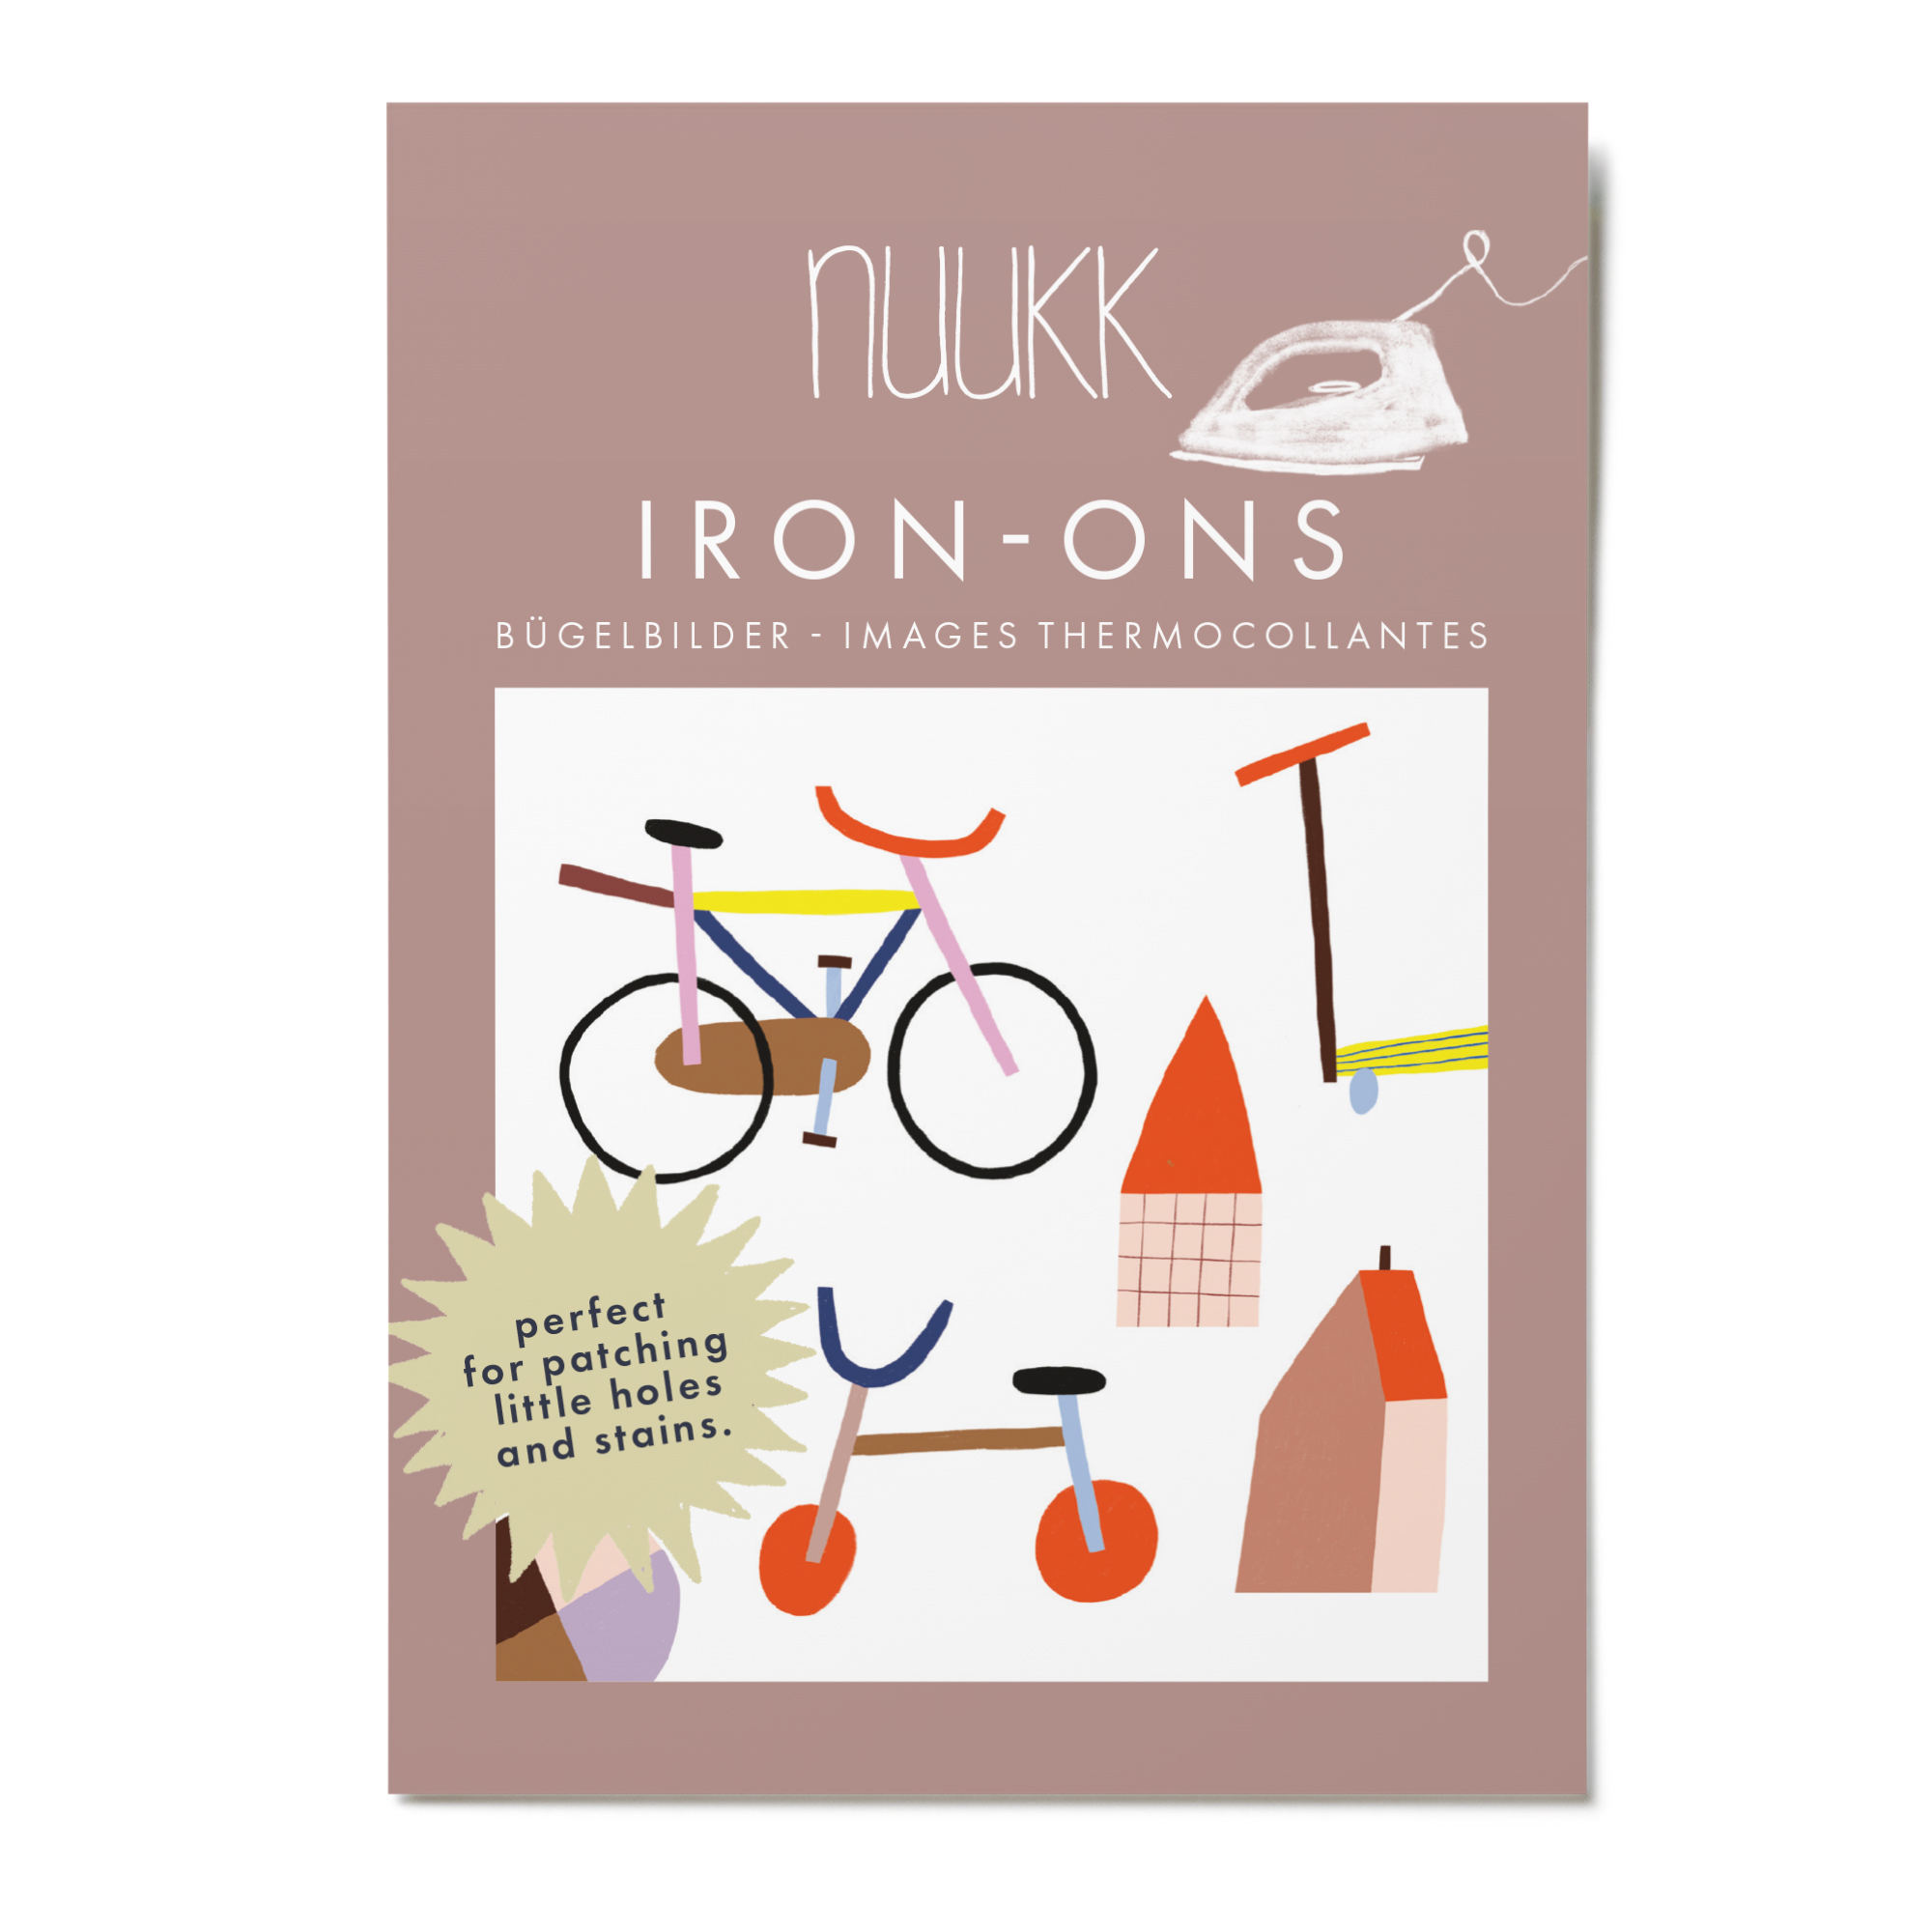 bicycle-Iron-Ons-verpackung-Buegelbilder-roller-haus-ball-annakatharinajansen-nuukk